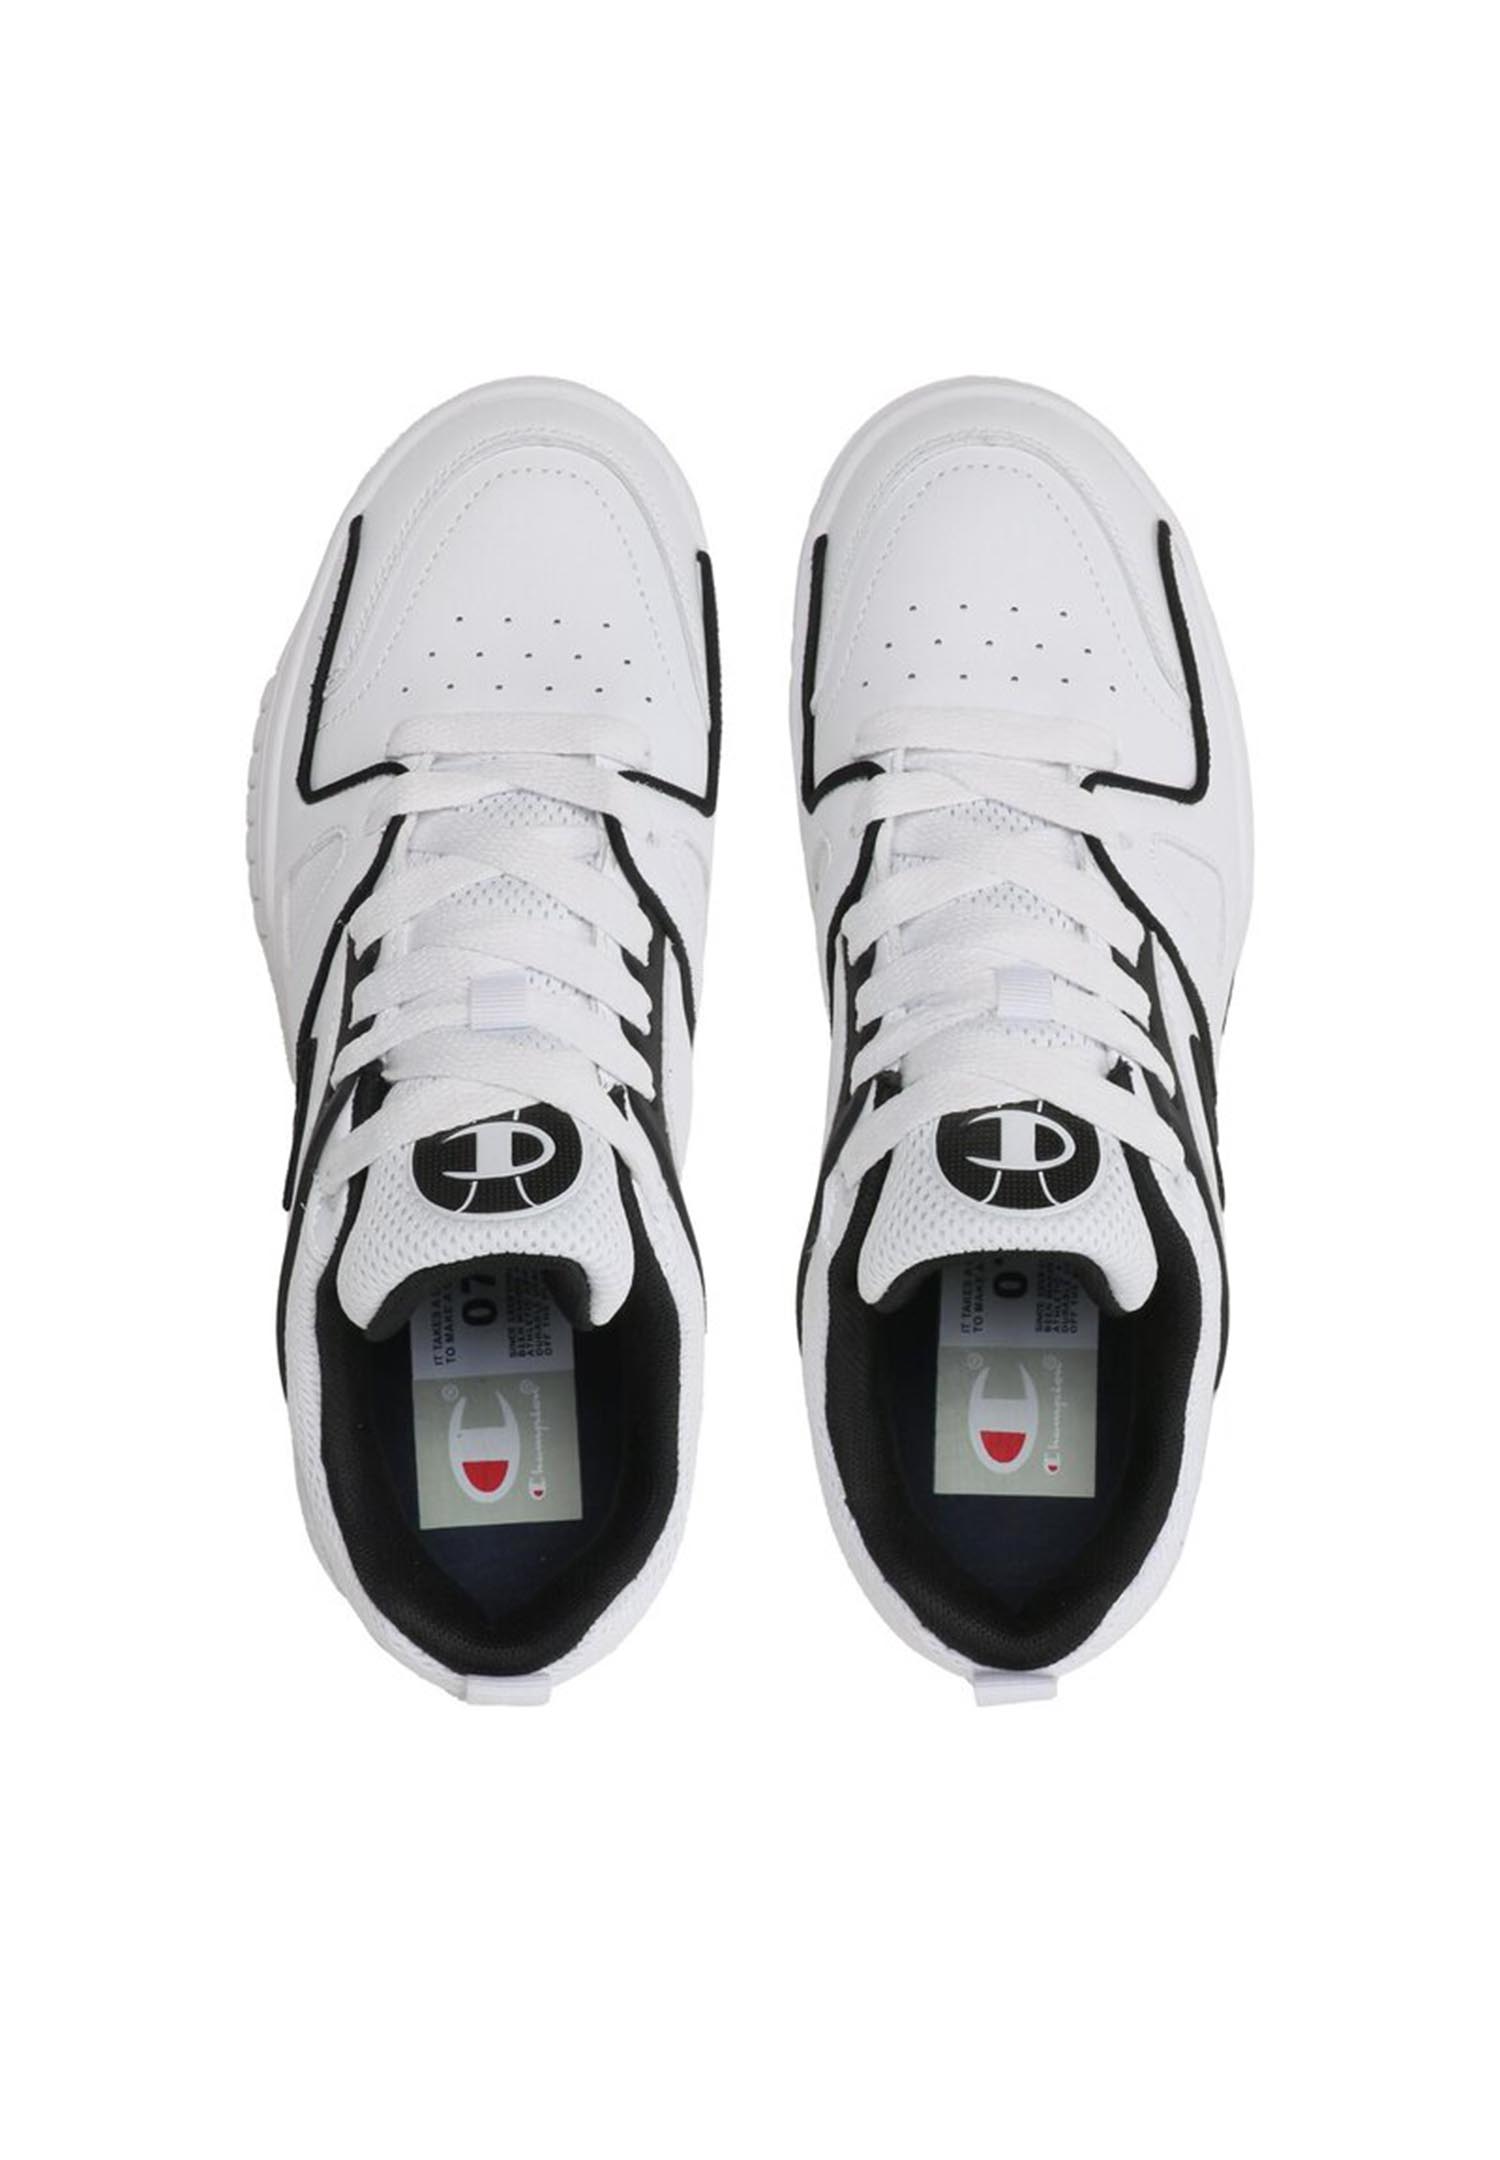 Champion 3 Point Low Herren Sneaker S21882-CHA-WW001 weiß/schwarz